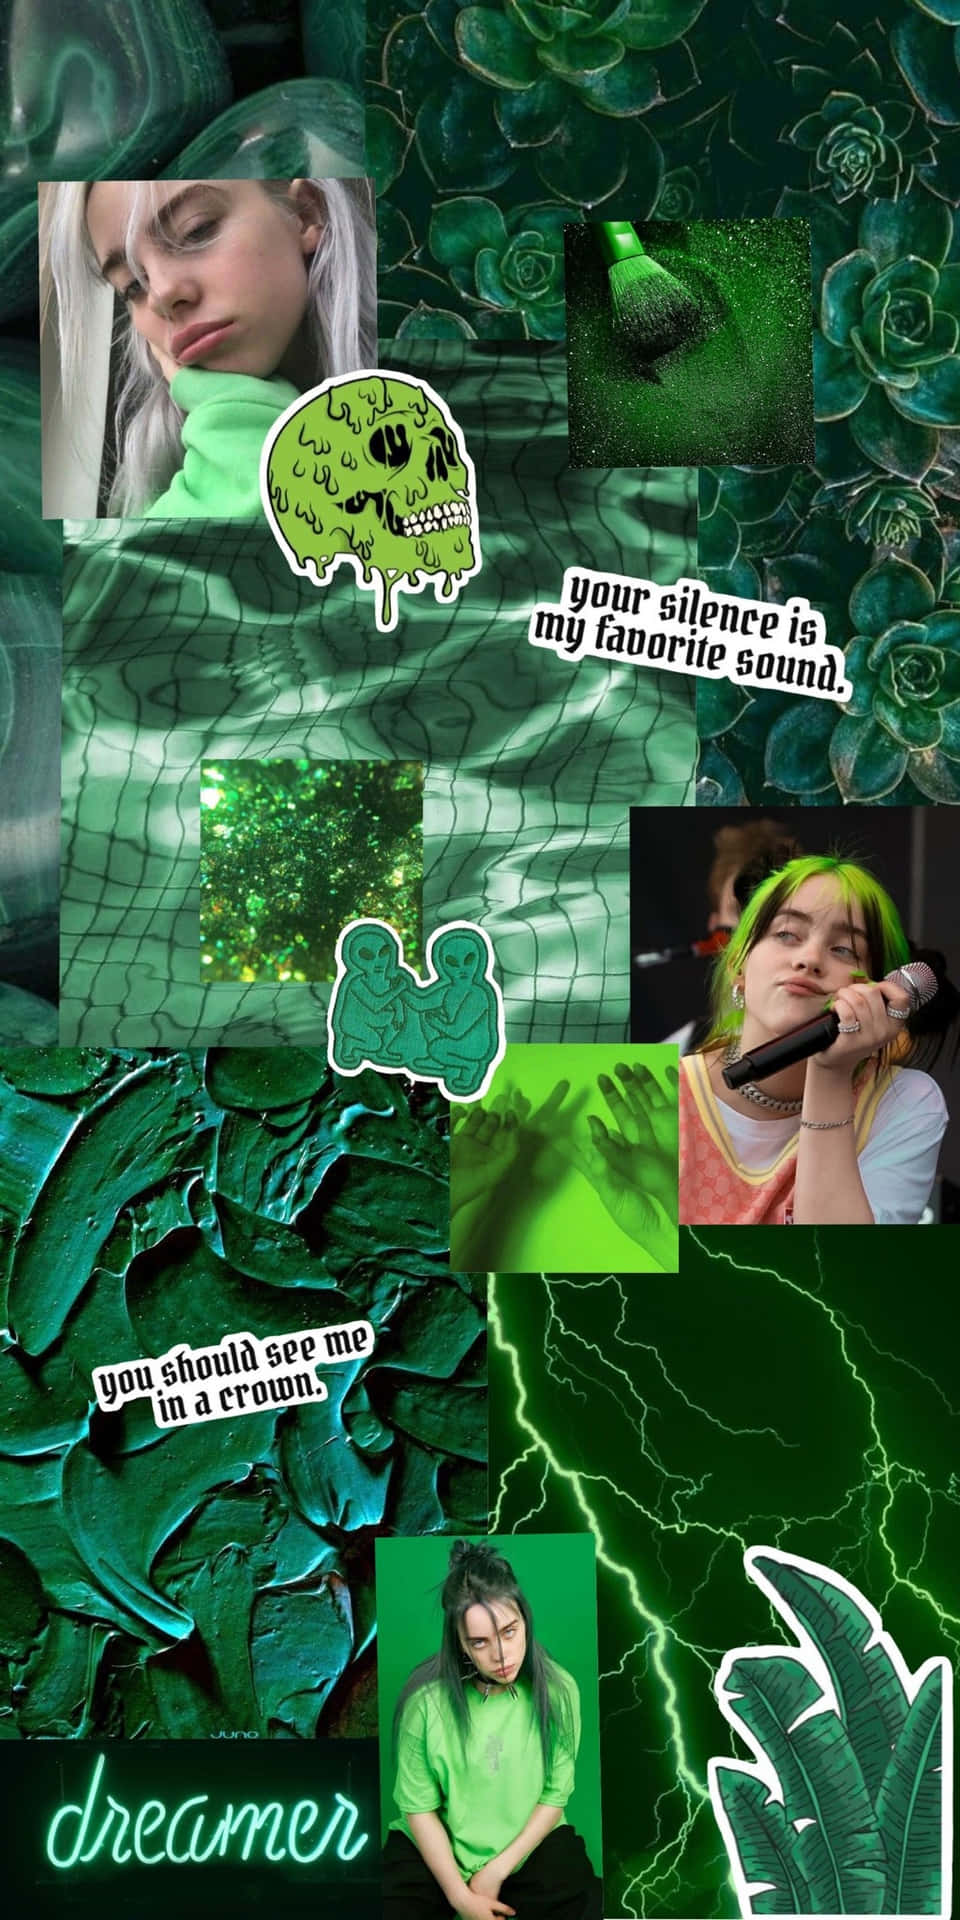 Billie Eilish green aesthetic wallpaper by juli3569 on DeviantArt